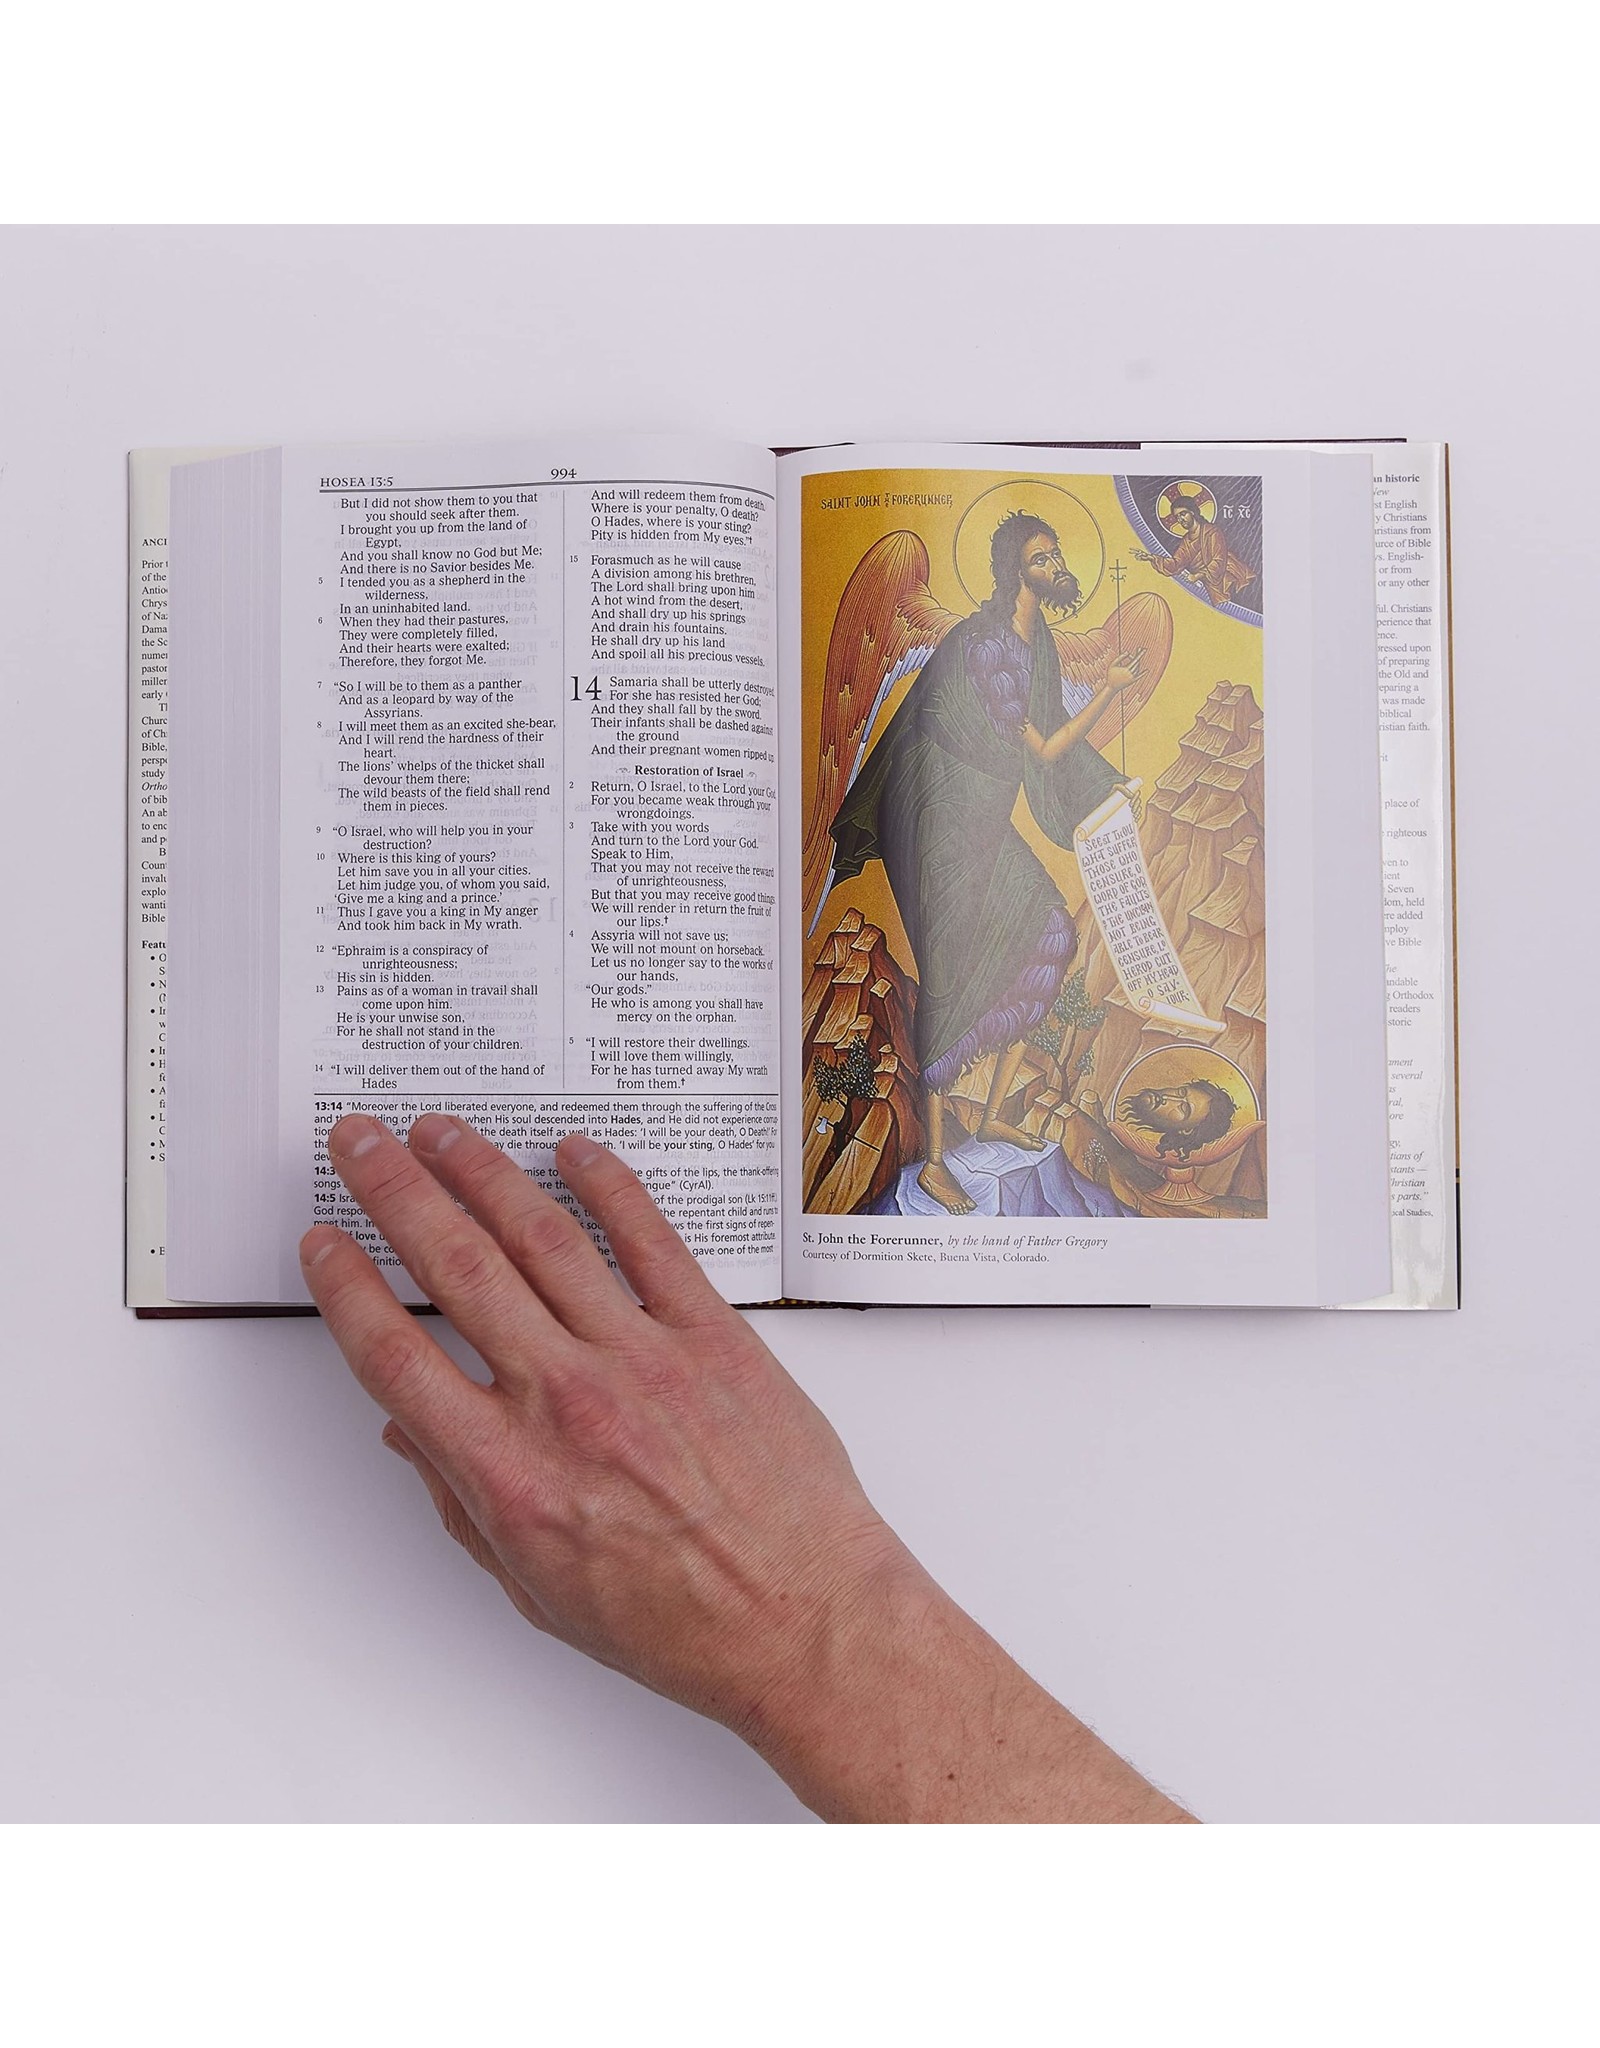 Thomas Nelson Orthodox Study Bible